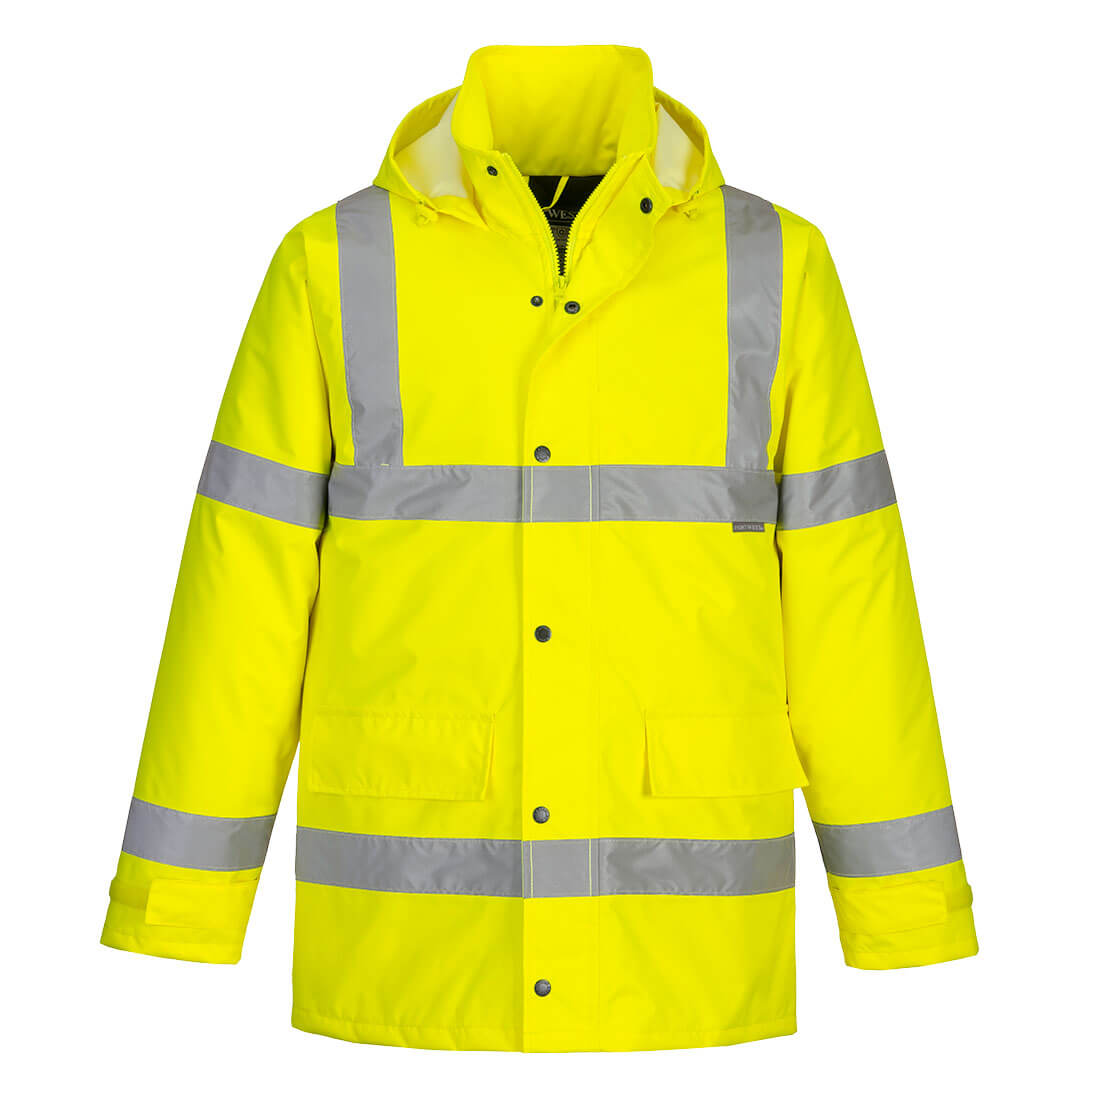 Portwest S460 - Yellow Medium Hi-Vis Traffic Jacket Coat Reflective Visibility